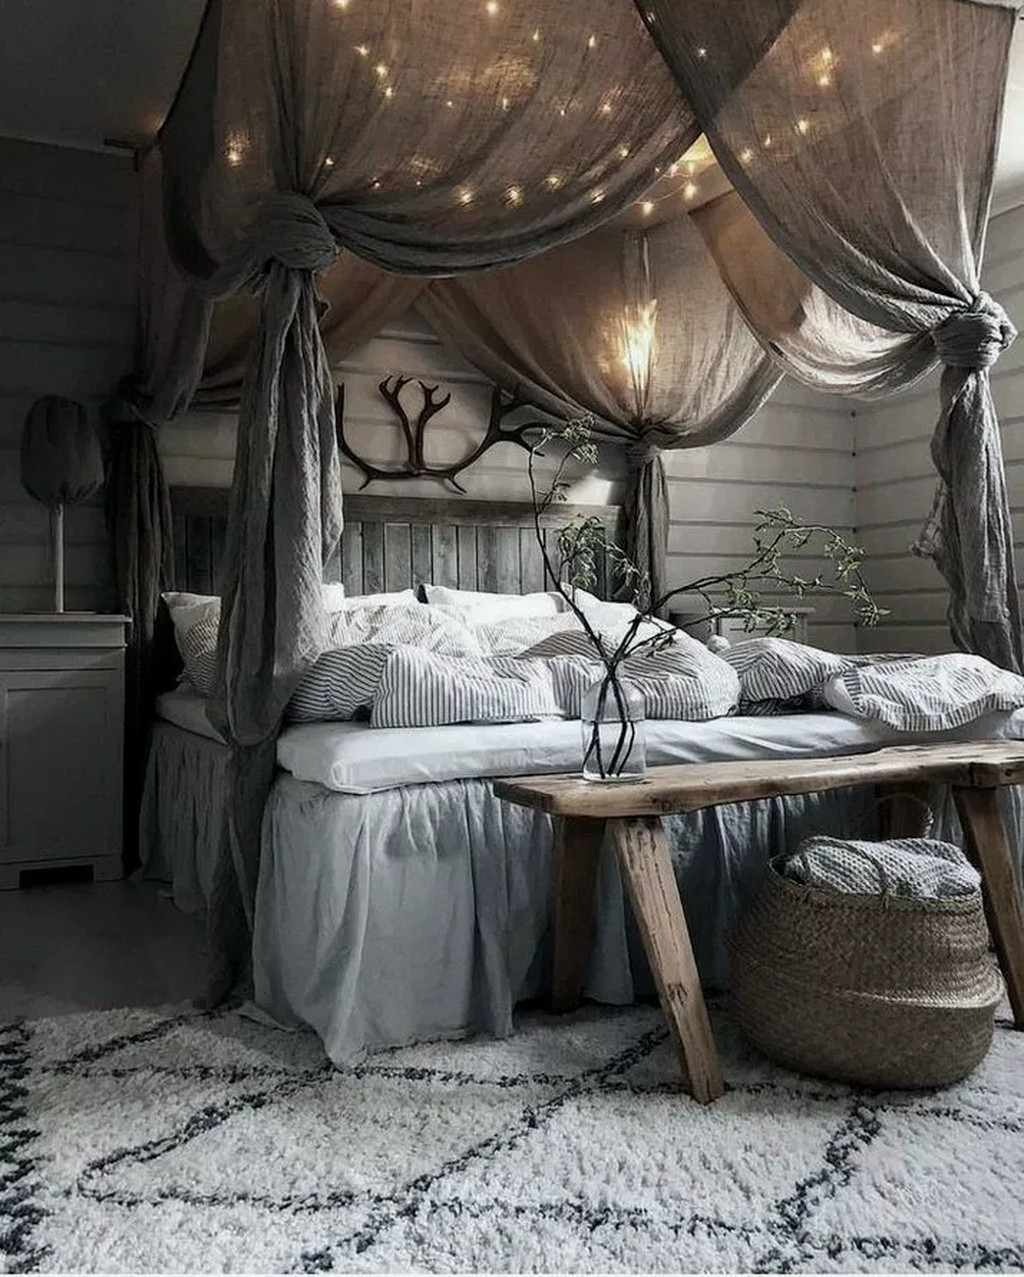 Rustic Bedroom Ideas Diy
 45 Awesome Diy Rustic And Romantic Master Bedroom Ideas